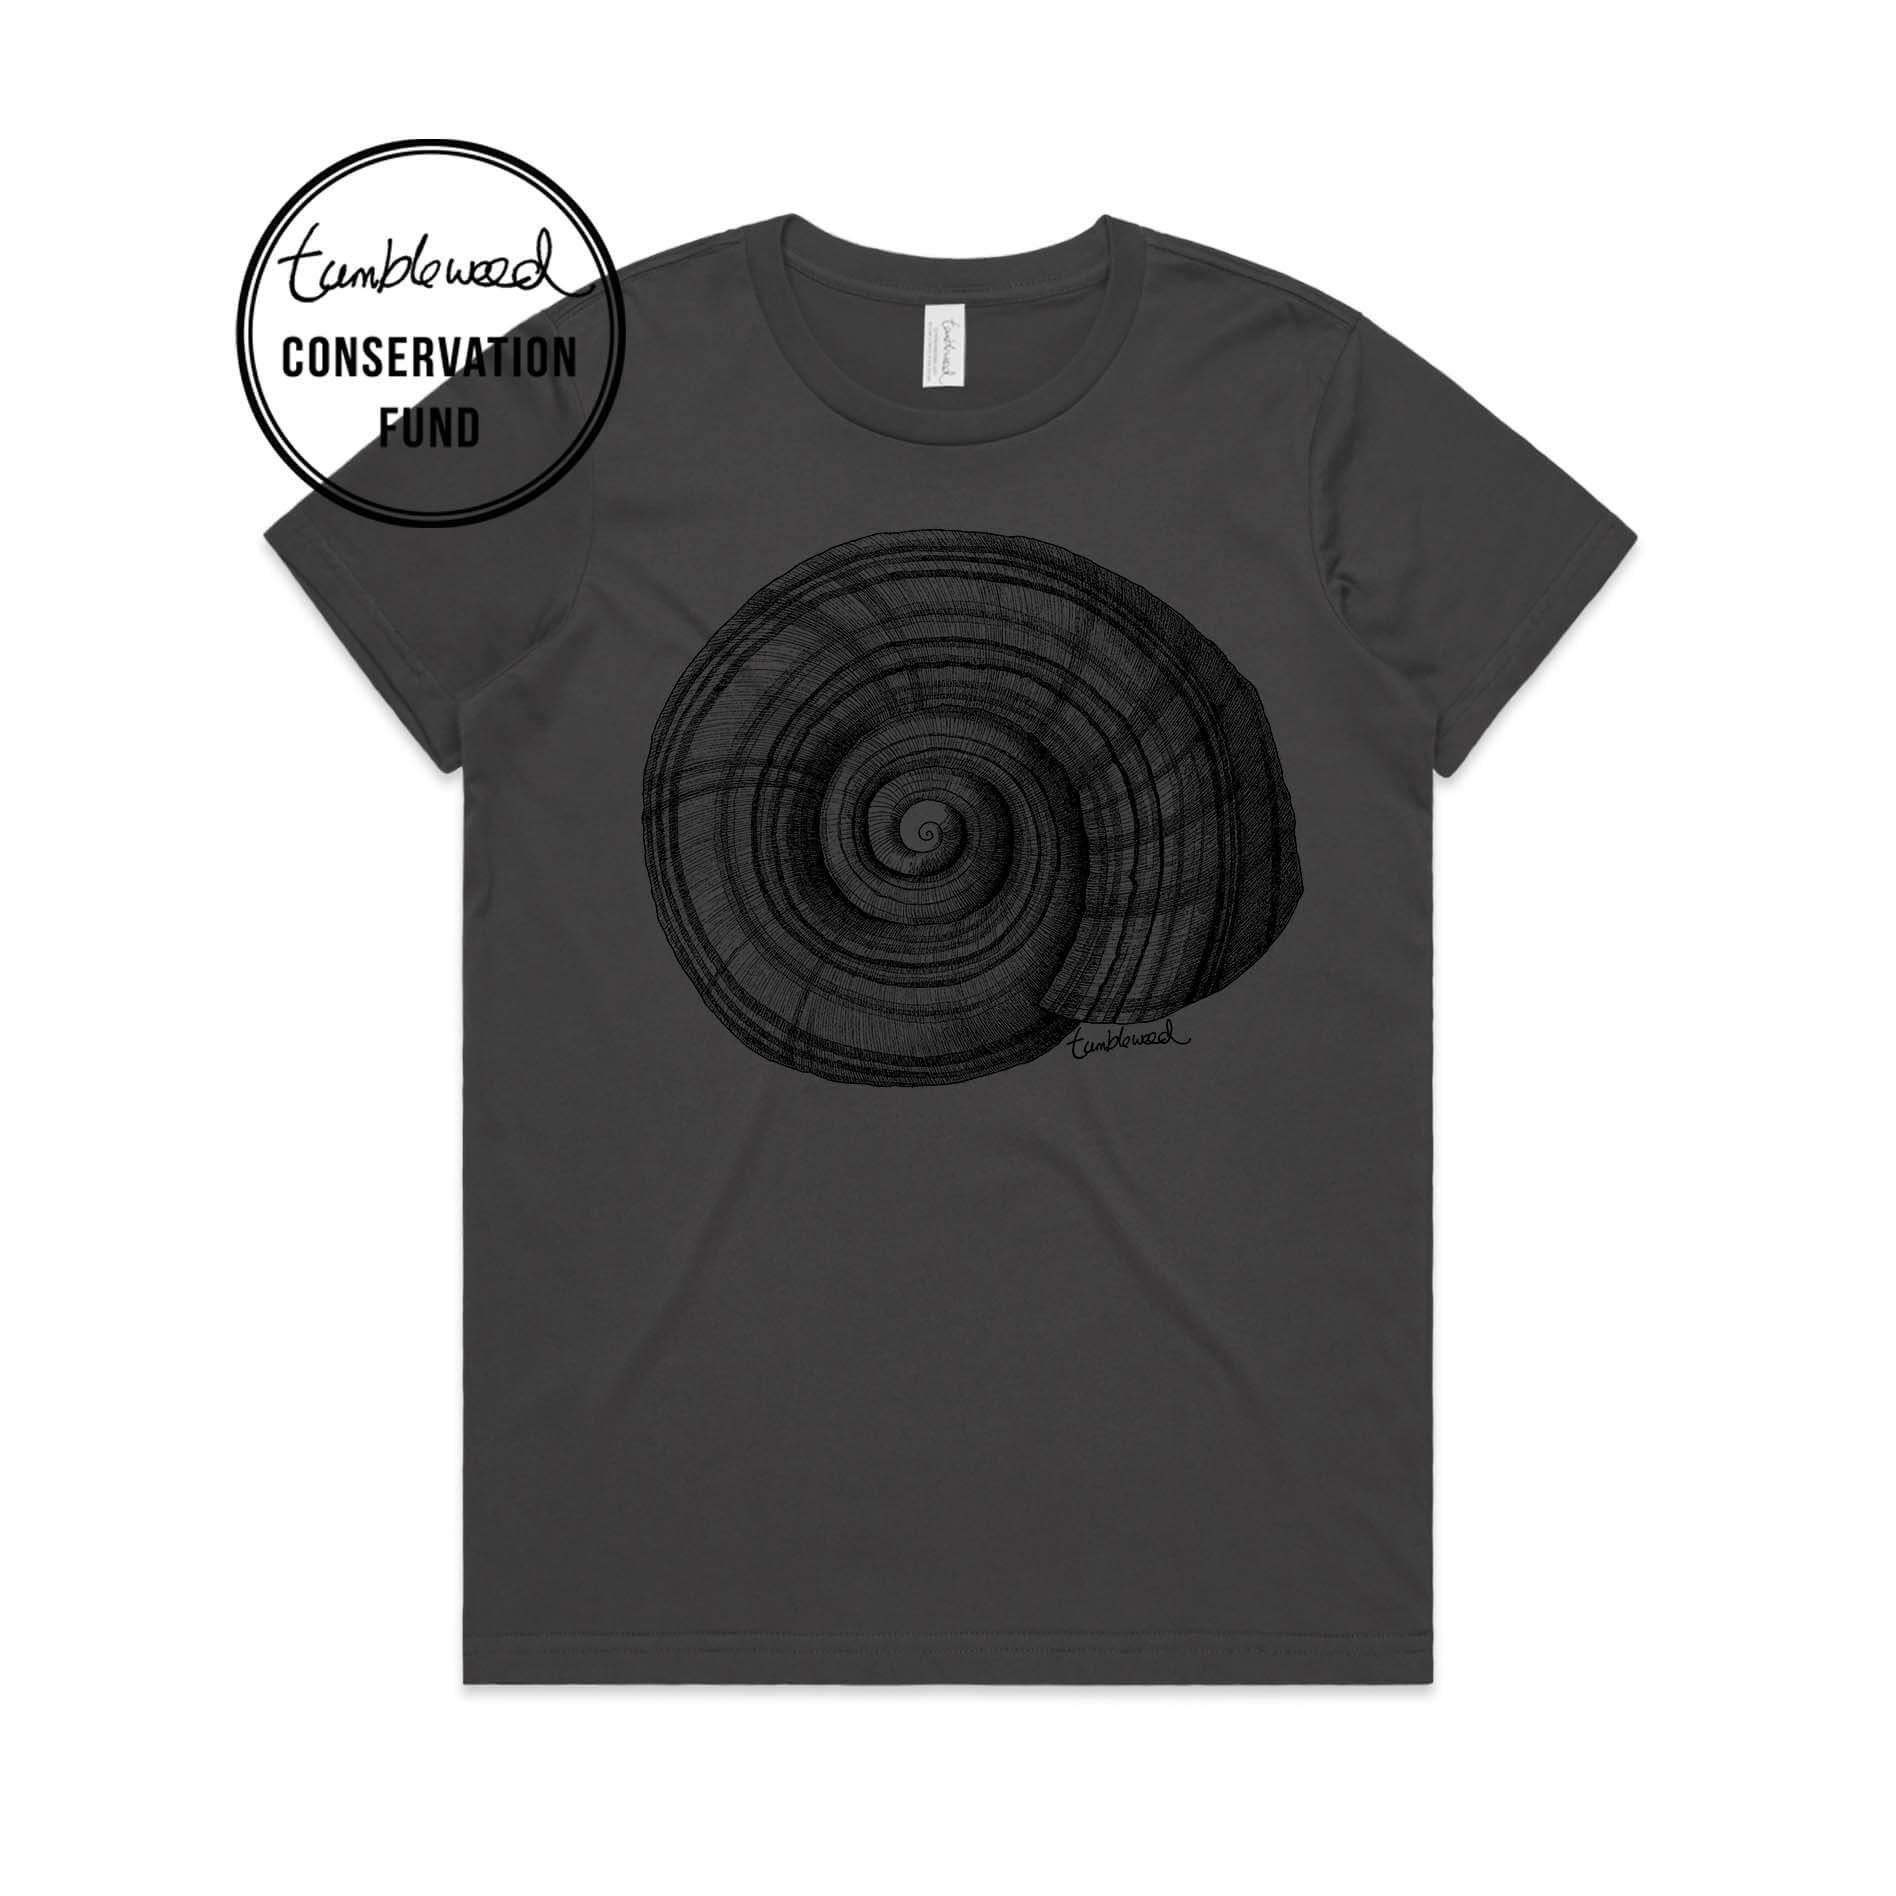 Charcoal, female t-shirt featuring a screen printed NZ Snail design.